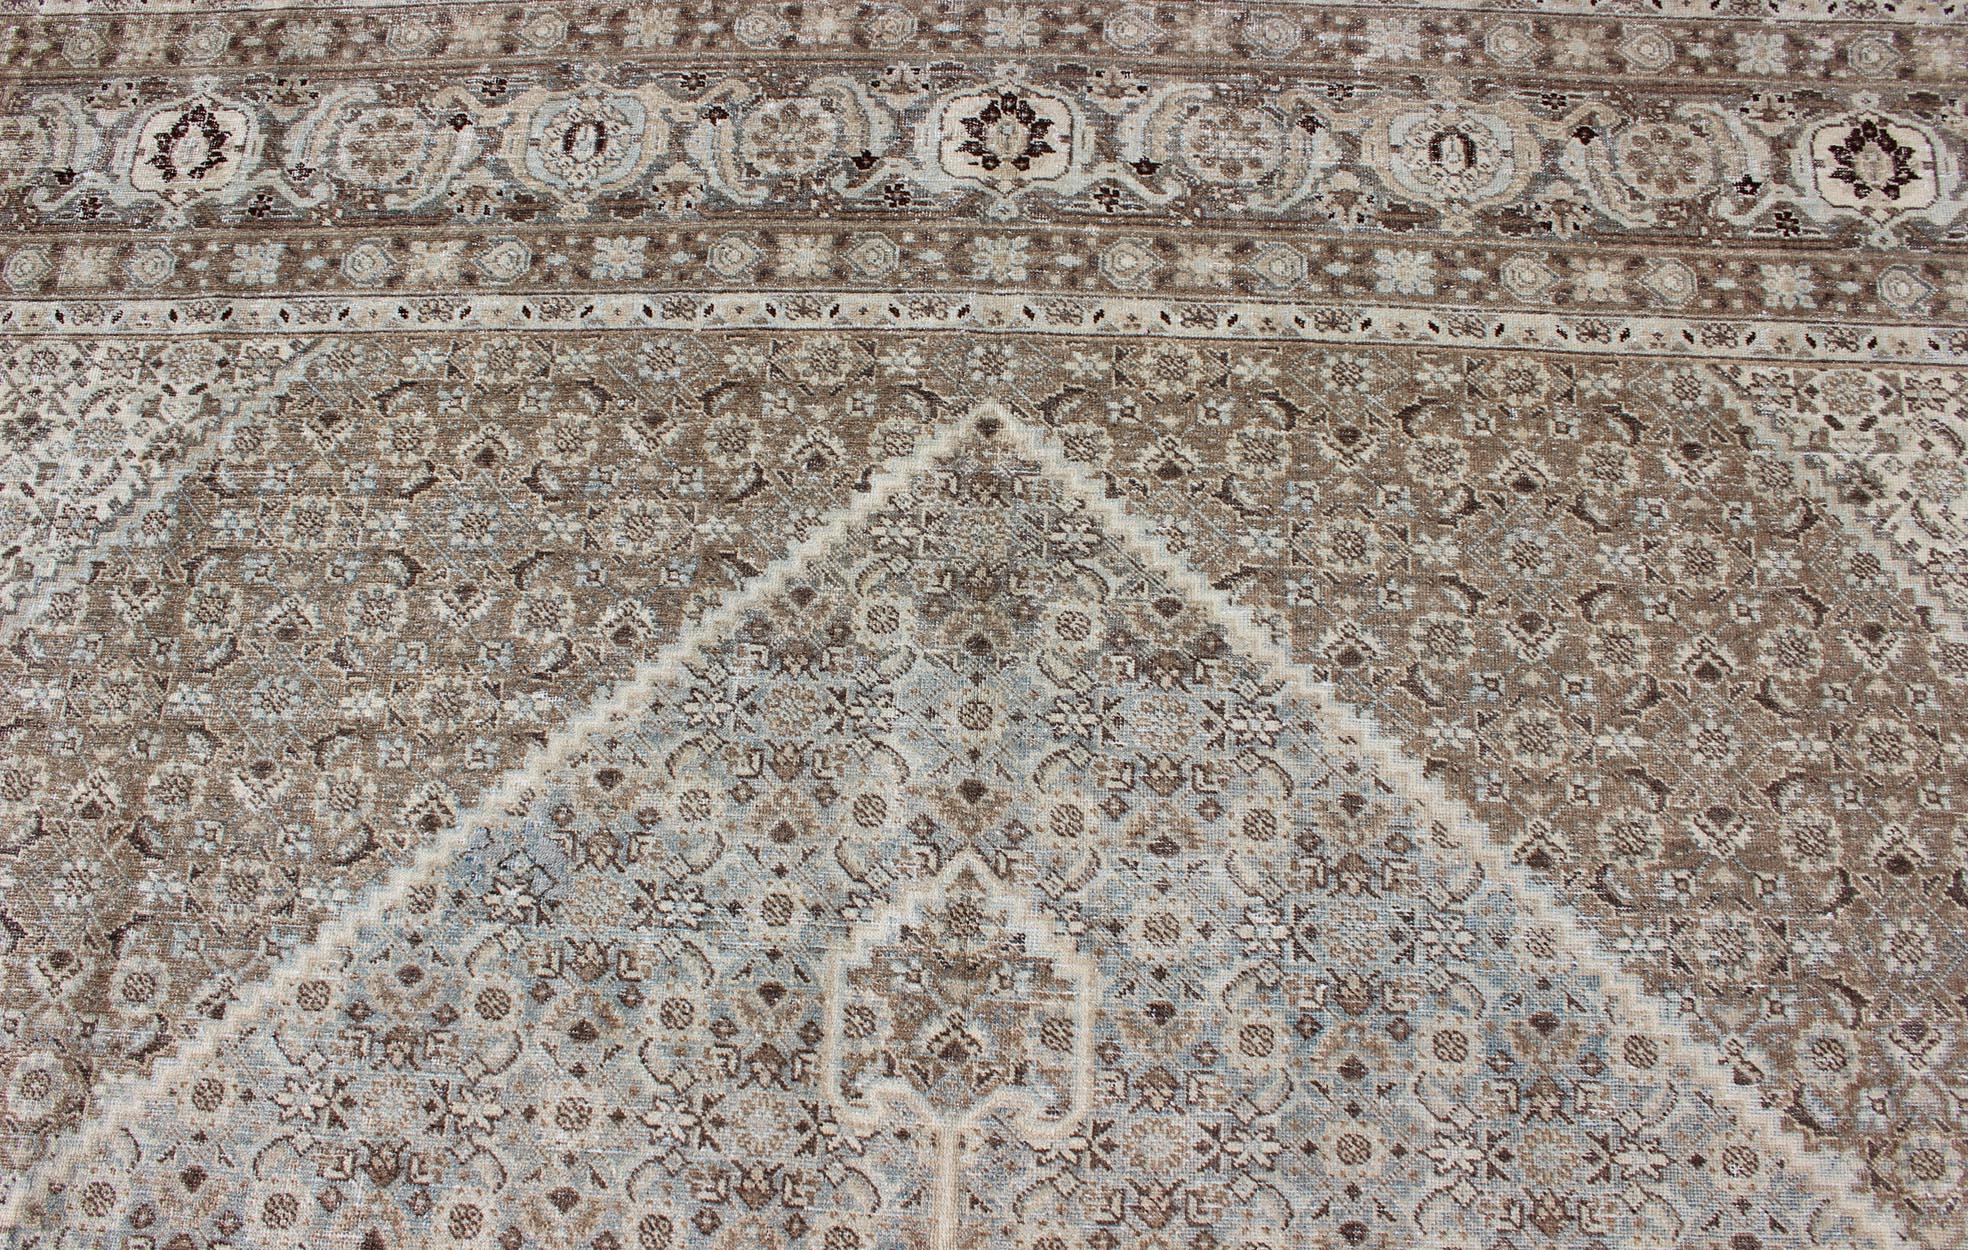 Antique Persian Tabriz Rug with a Geometric Diamond Design For Sale 3